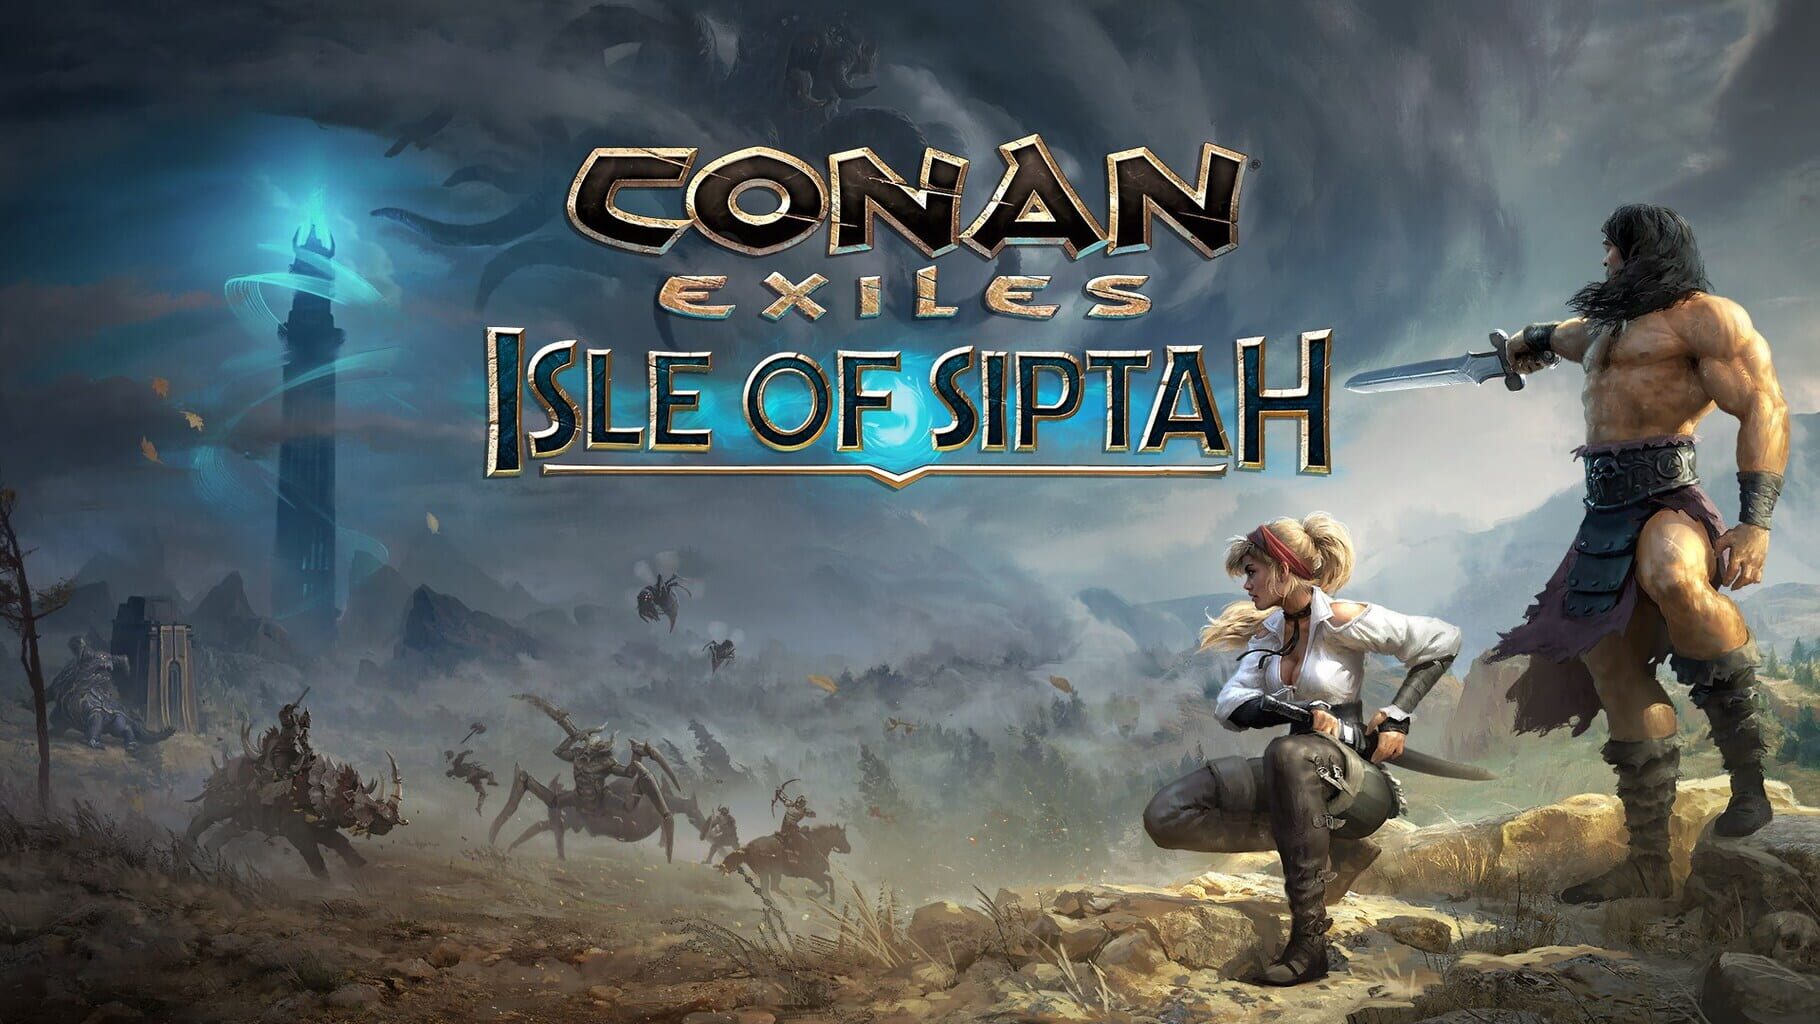 Conan Exiles: Isle of Siptah Image